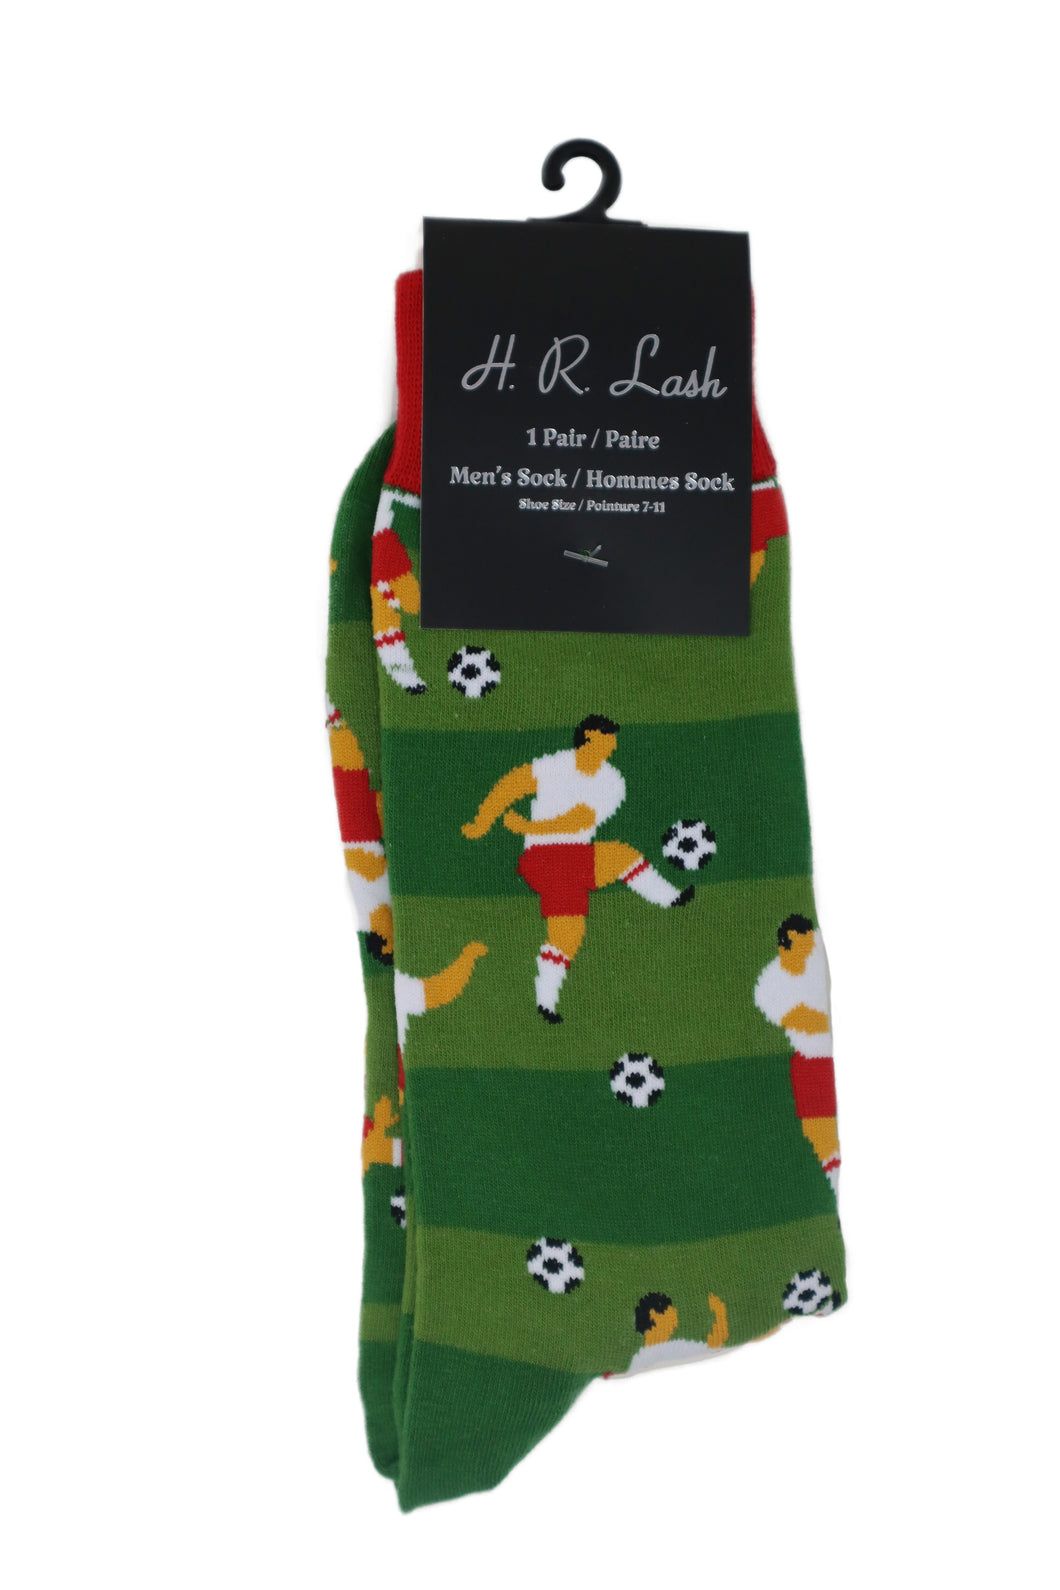 H. R. Lash | FS001 | Fun Socks | Green Soccer